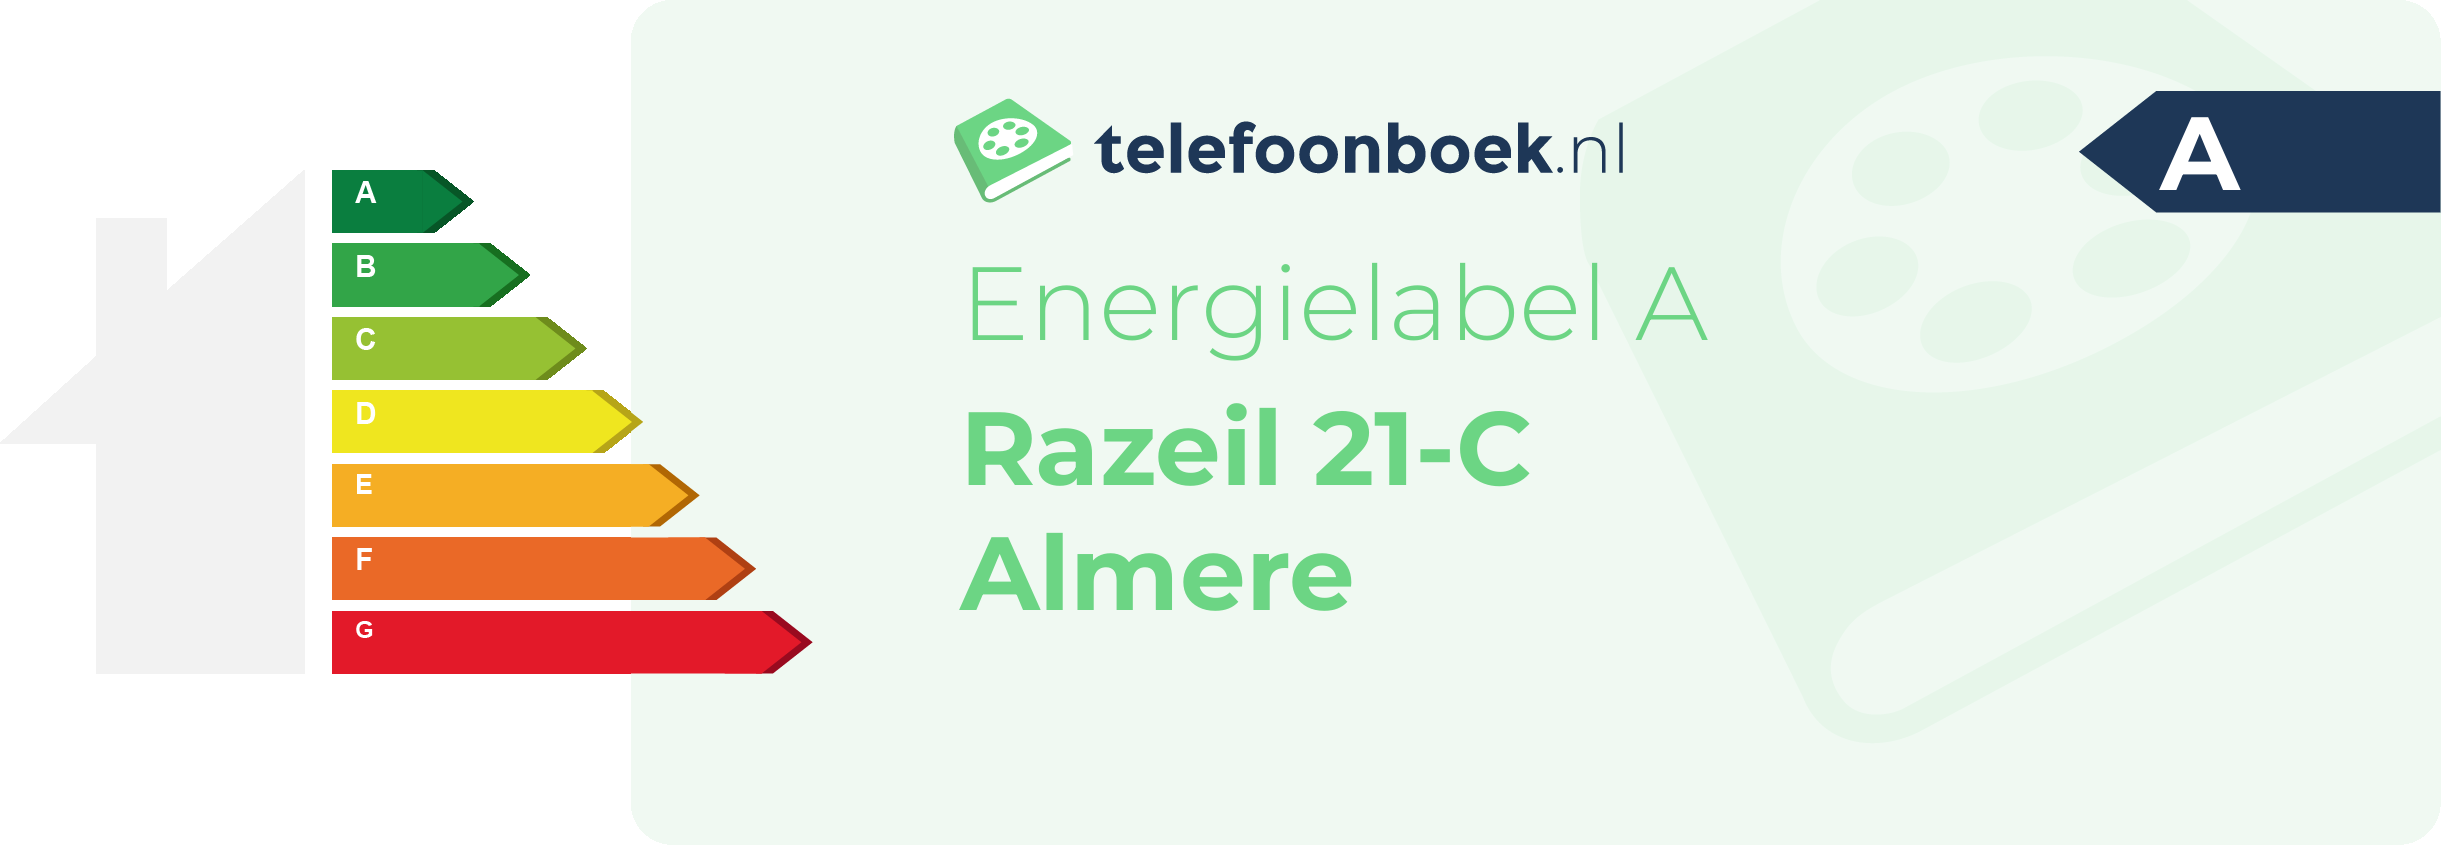 Energielabel Razeil 21-C Almere